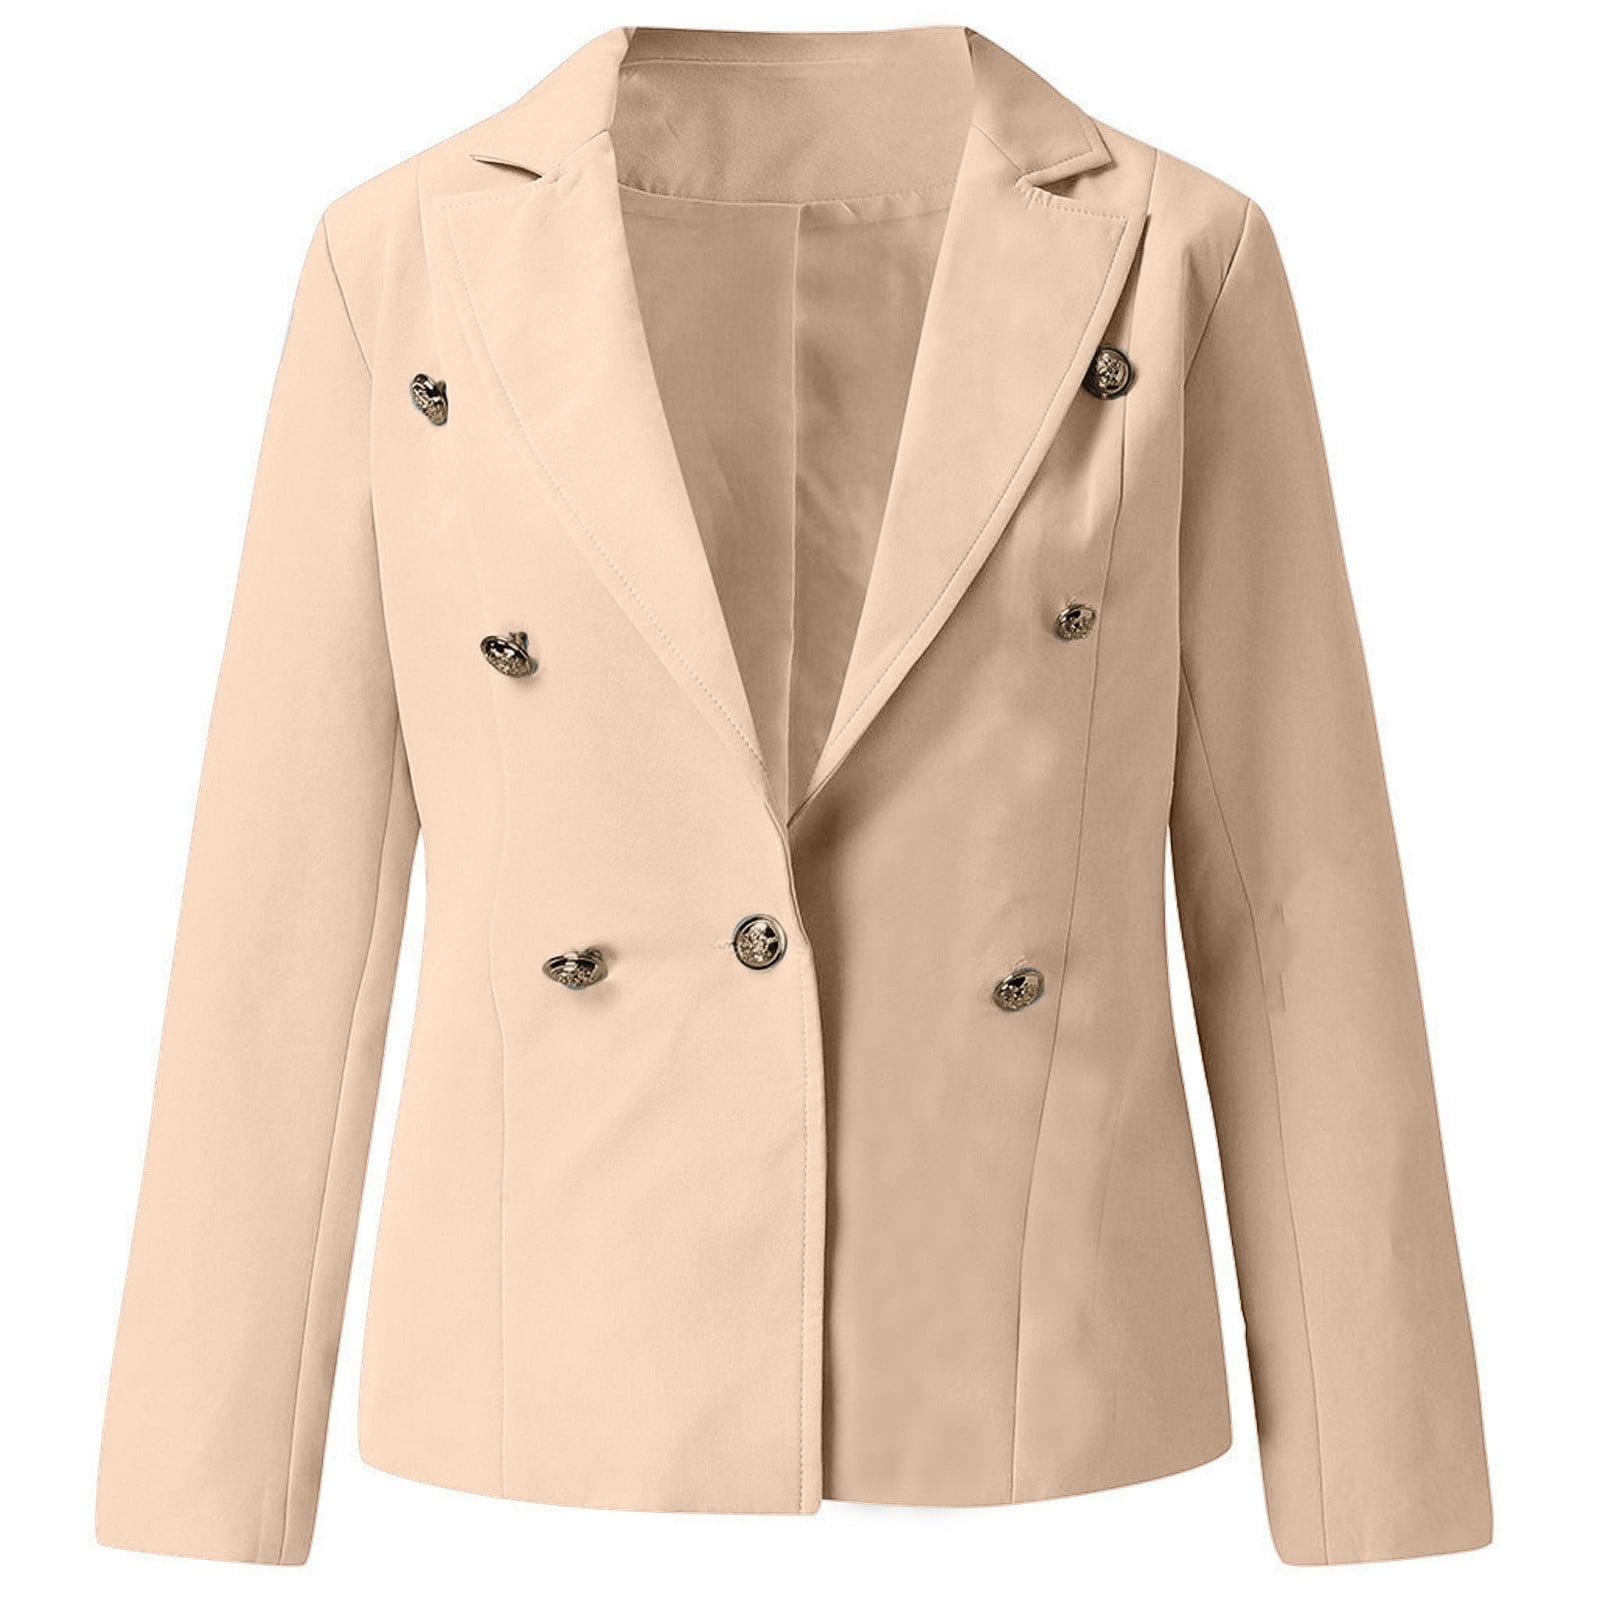 At vise sygdom udvande Faux Leather Jacket for Women's Fashion Blazer Tops Long Sleeve Lapel Motor  Biker Punk Casual Cropped Coat Outwear - Walmart.com